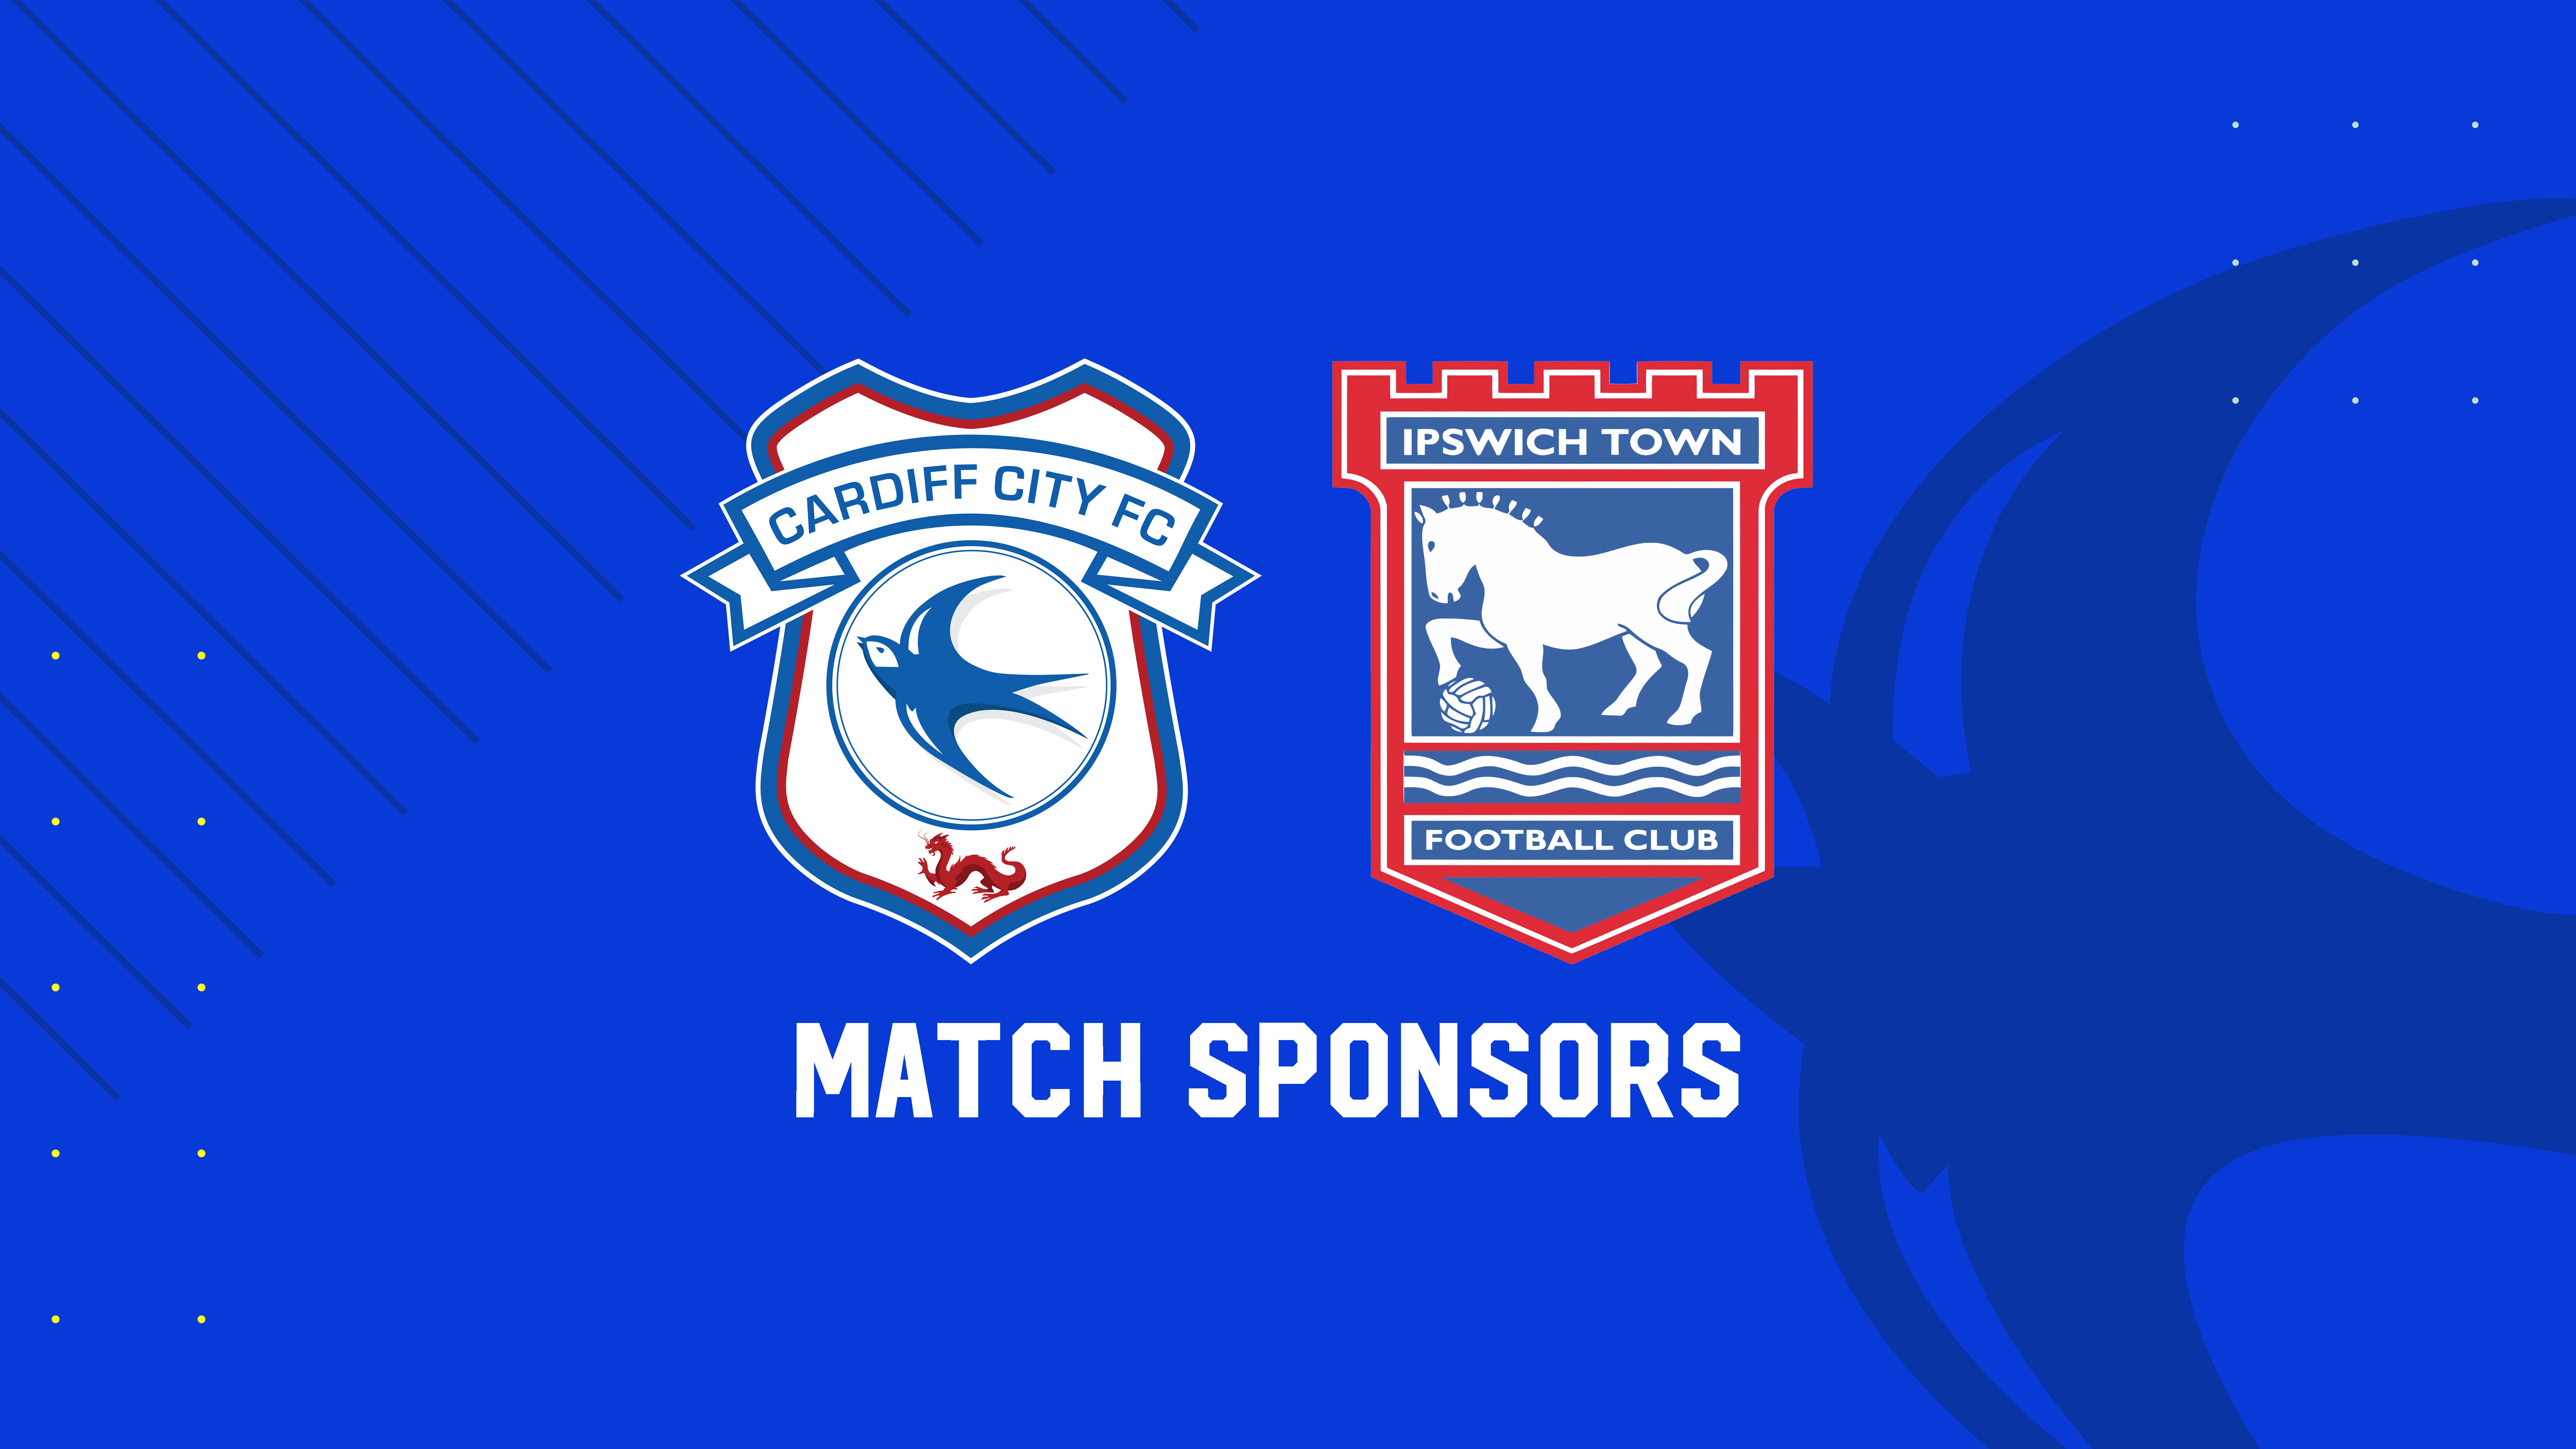 Match Sponsors | Cardiff City vs. Ipswich Town